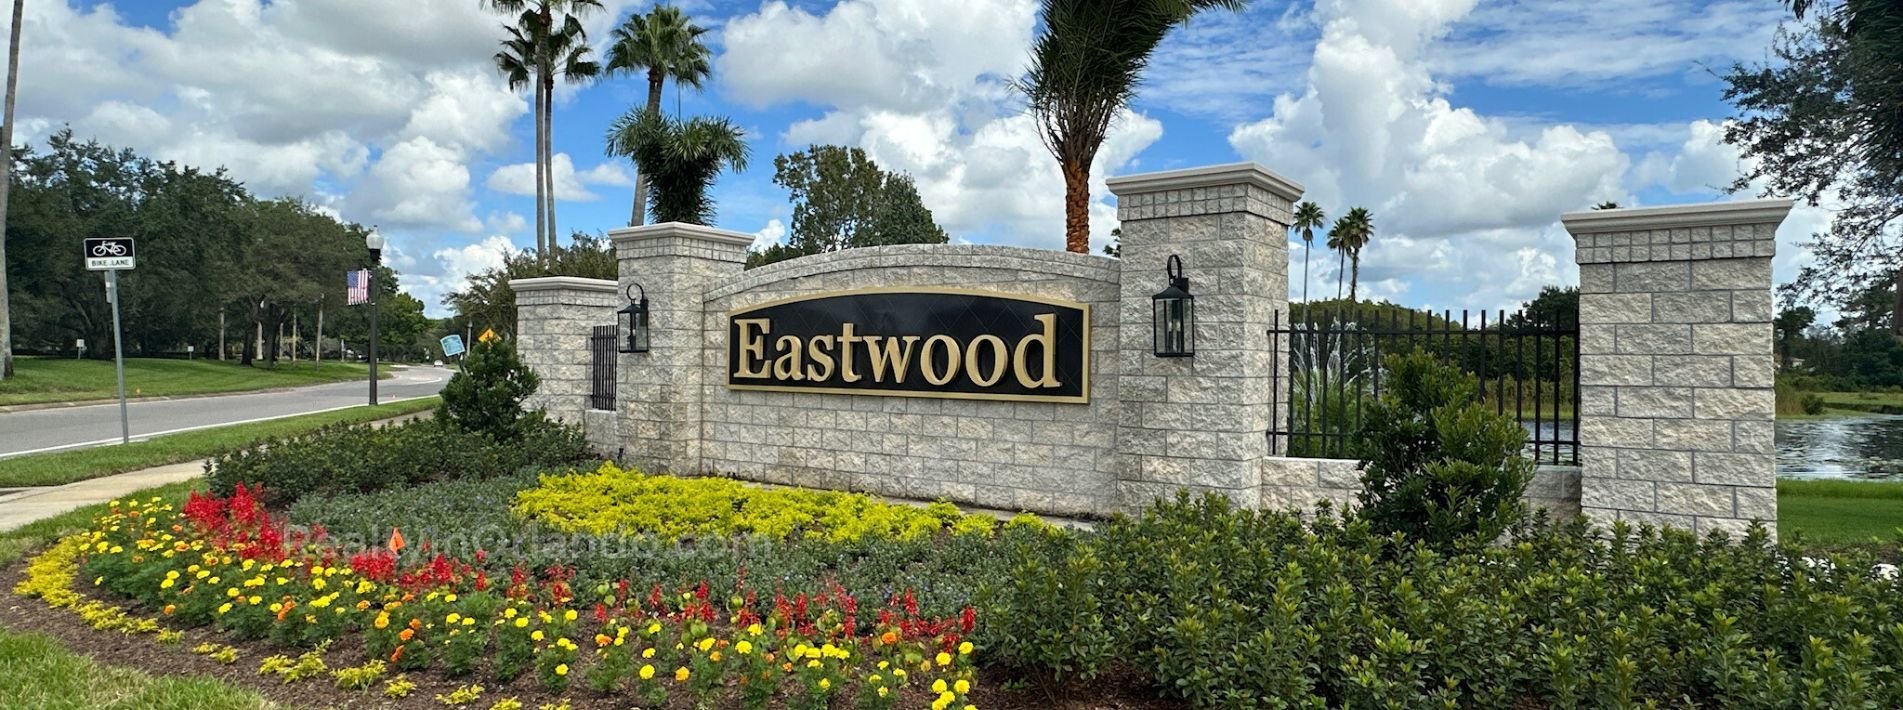 Eastwood Orlando Real Estate